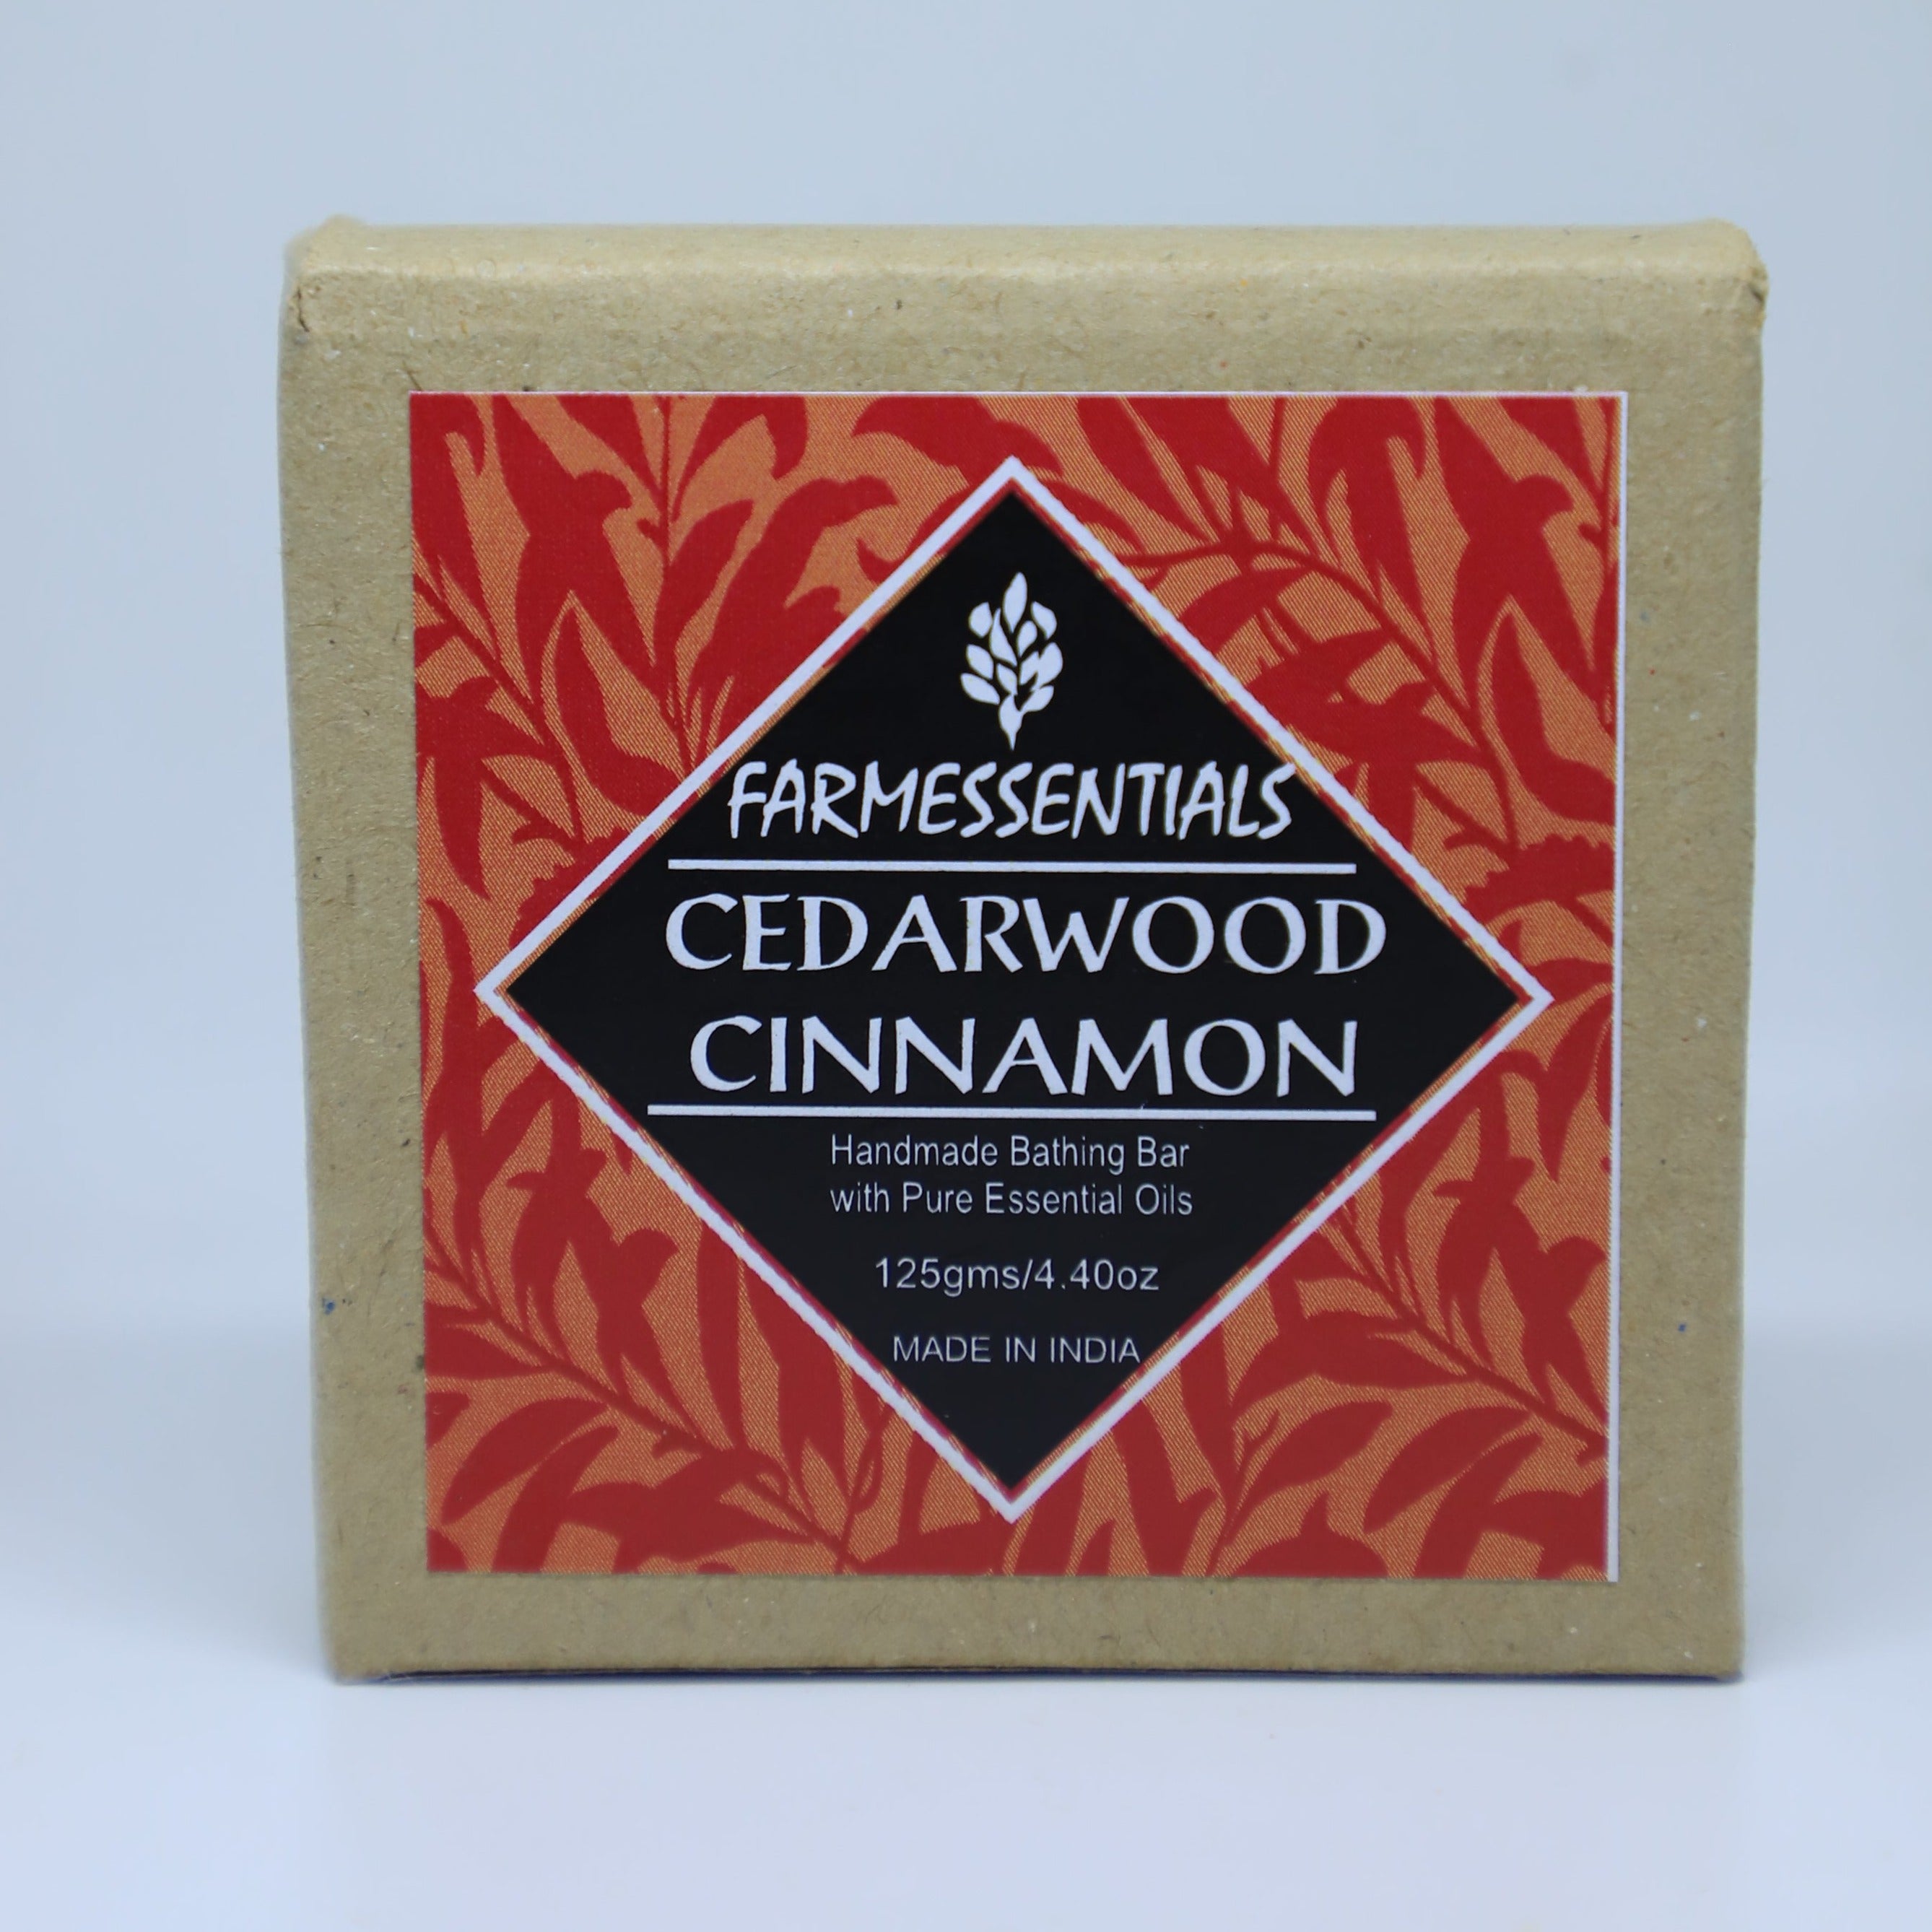 Cedarwood Cinnamon